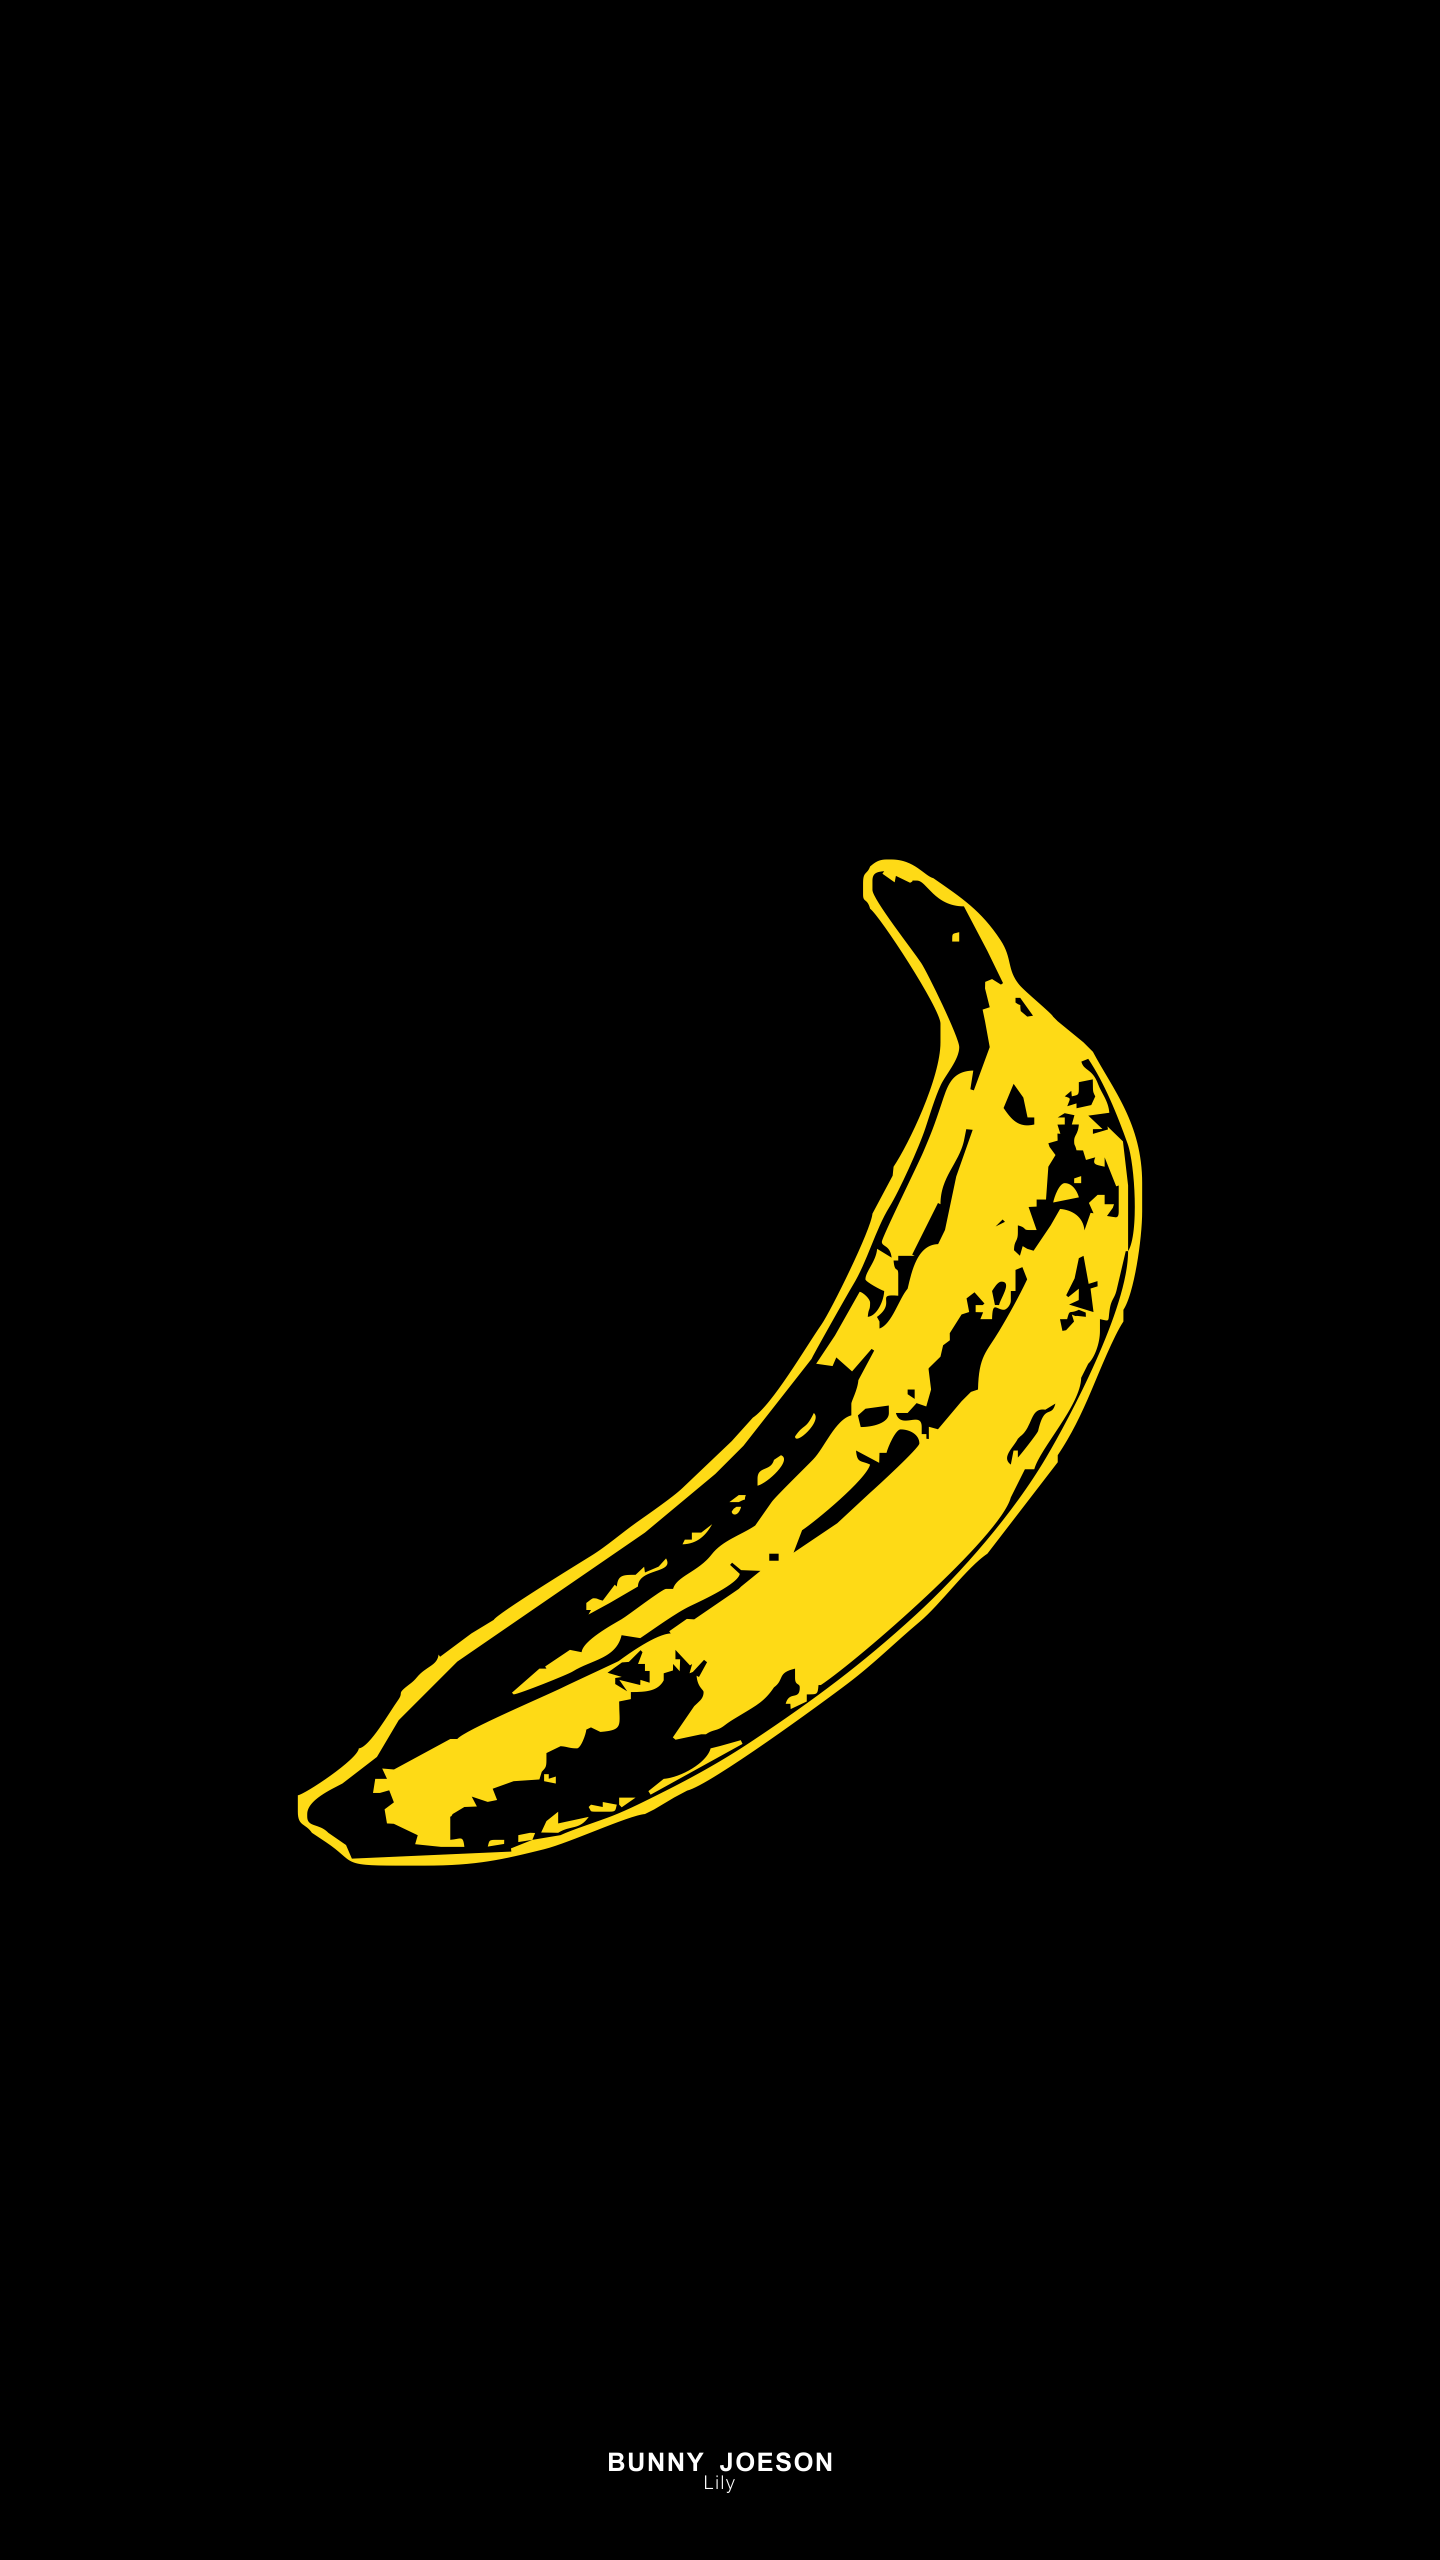 Andy Warhol iPhone Wallpaper. Black wallpaper, Android wallpaper black, Banana wallpaper